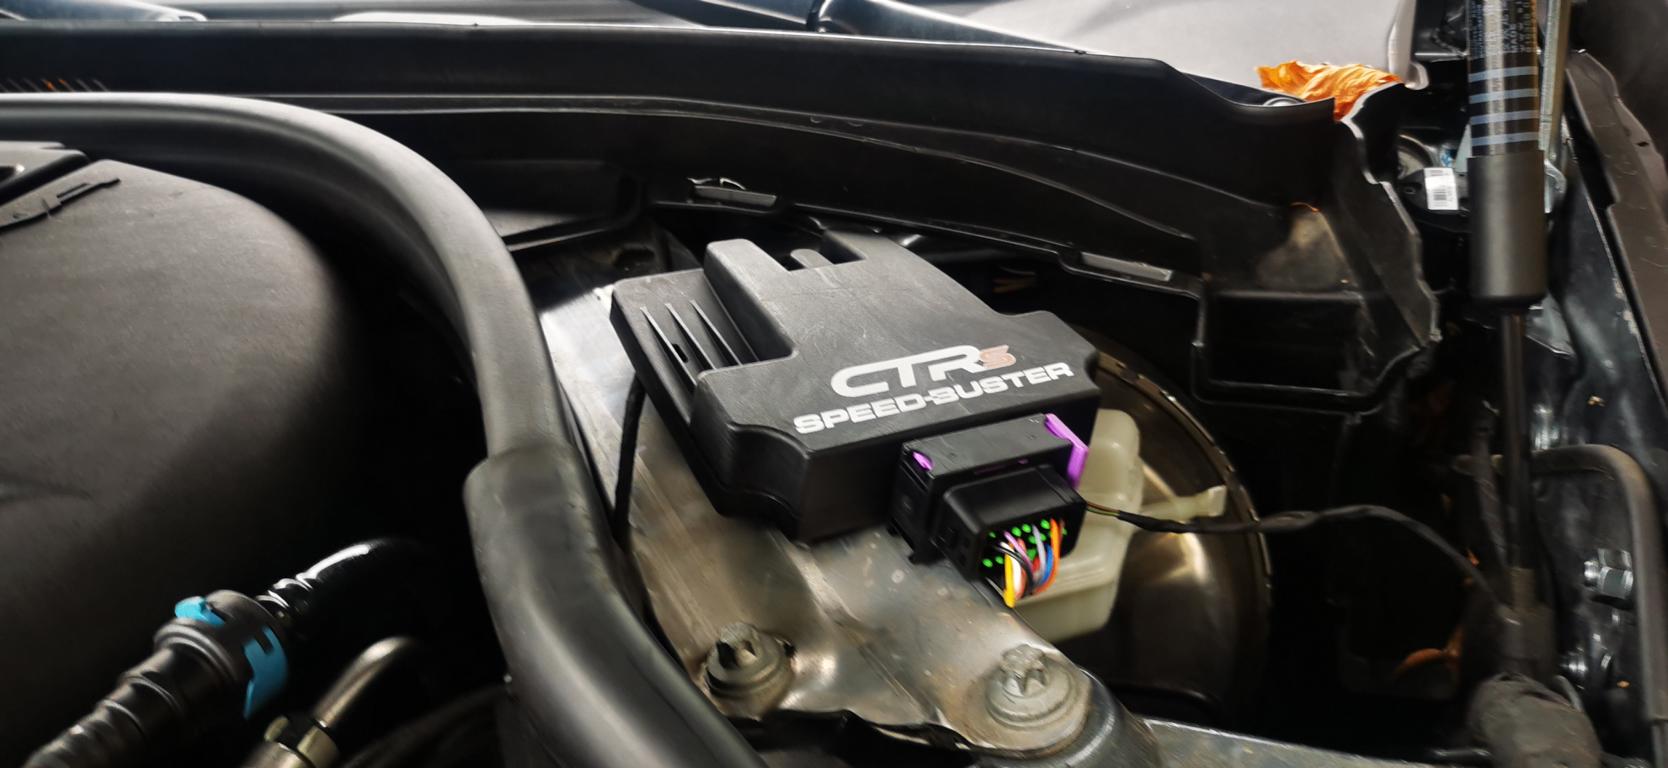 Tuningbox Speed Buster CTRS Tuning Box Chiptuning Leistungssteigerung 2